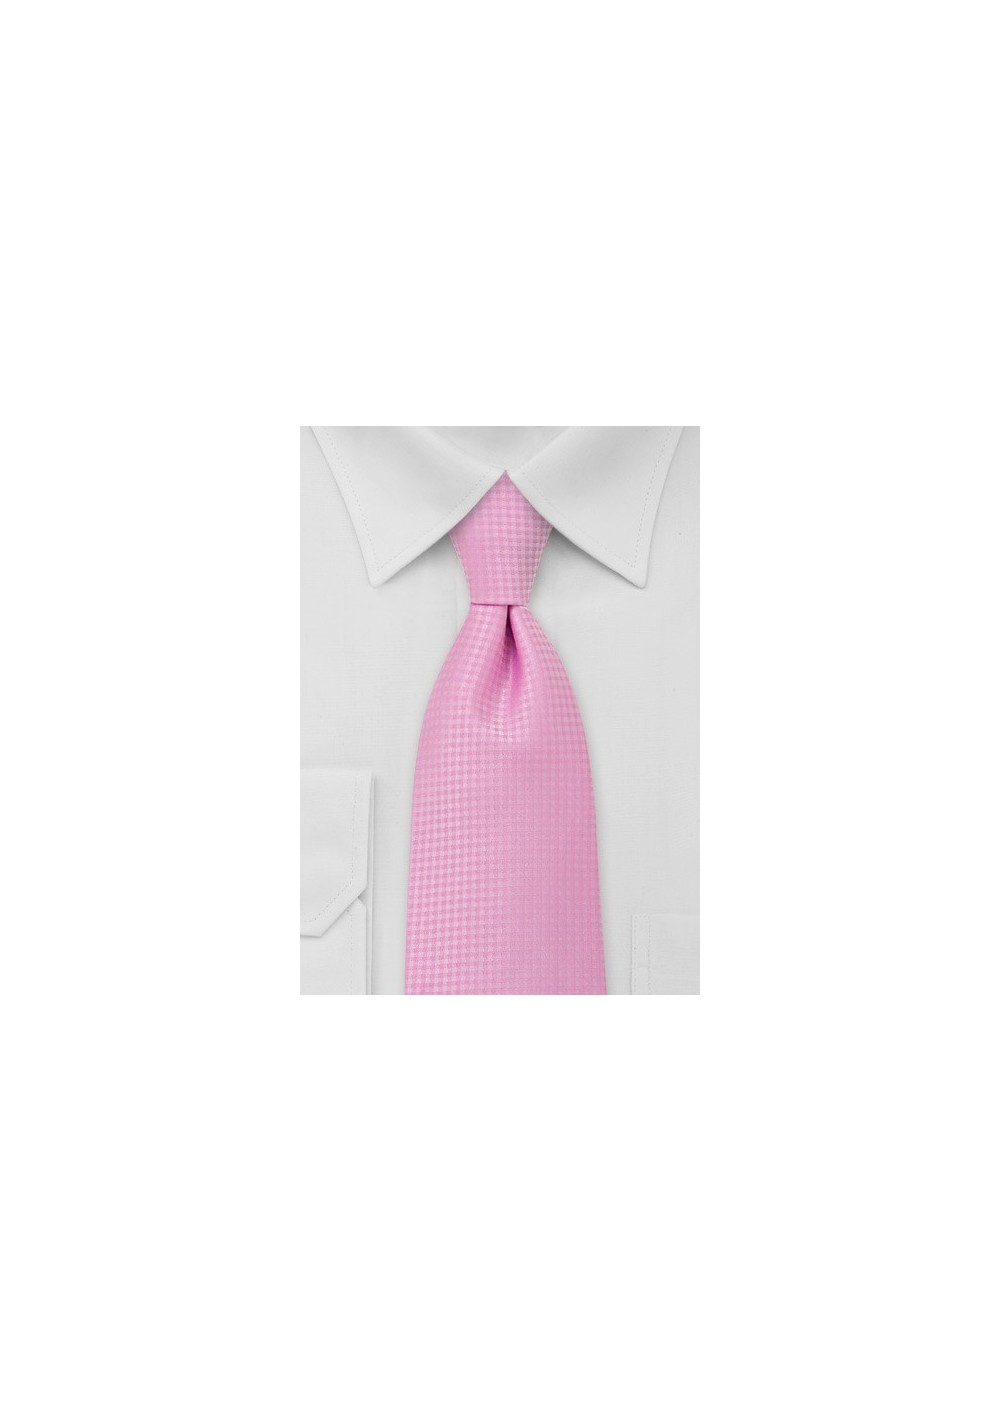 Light Pink Mens Necktie